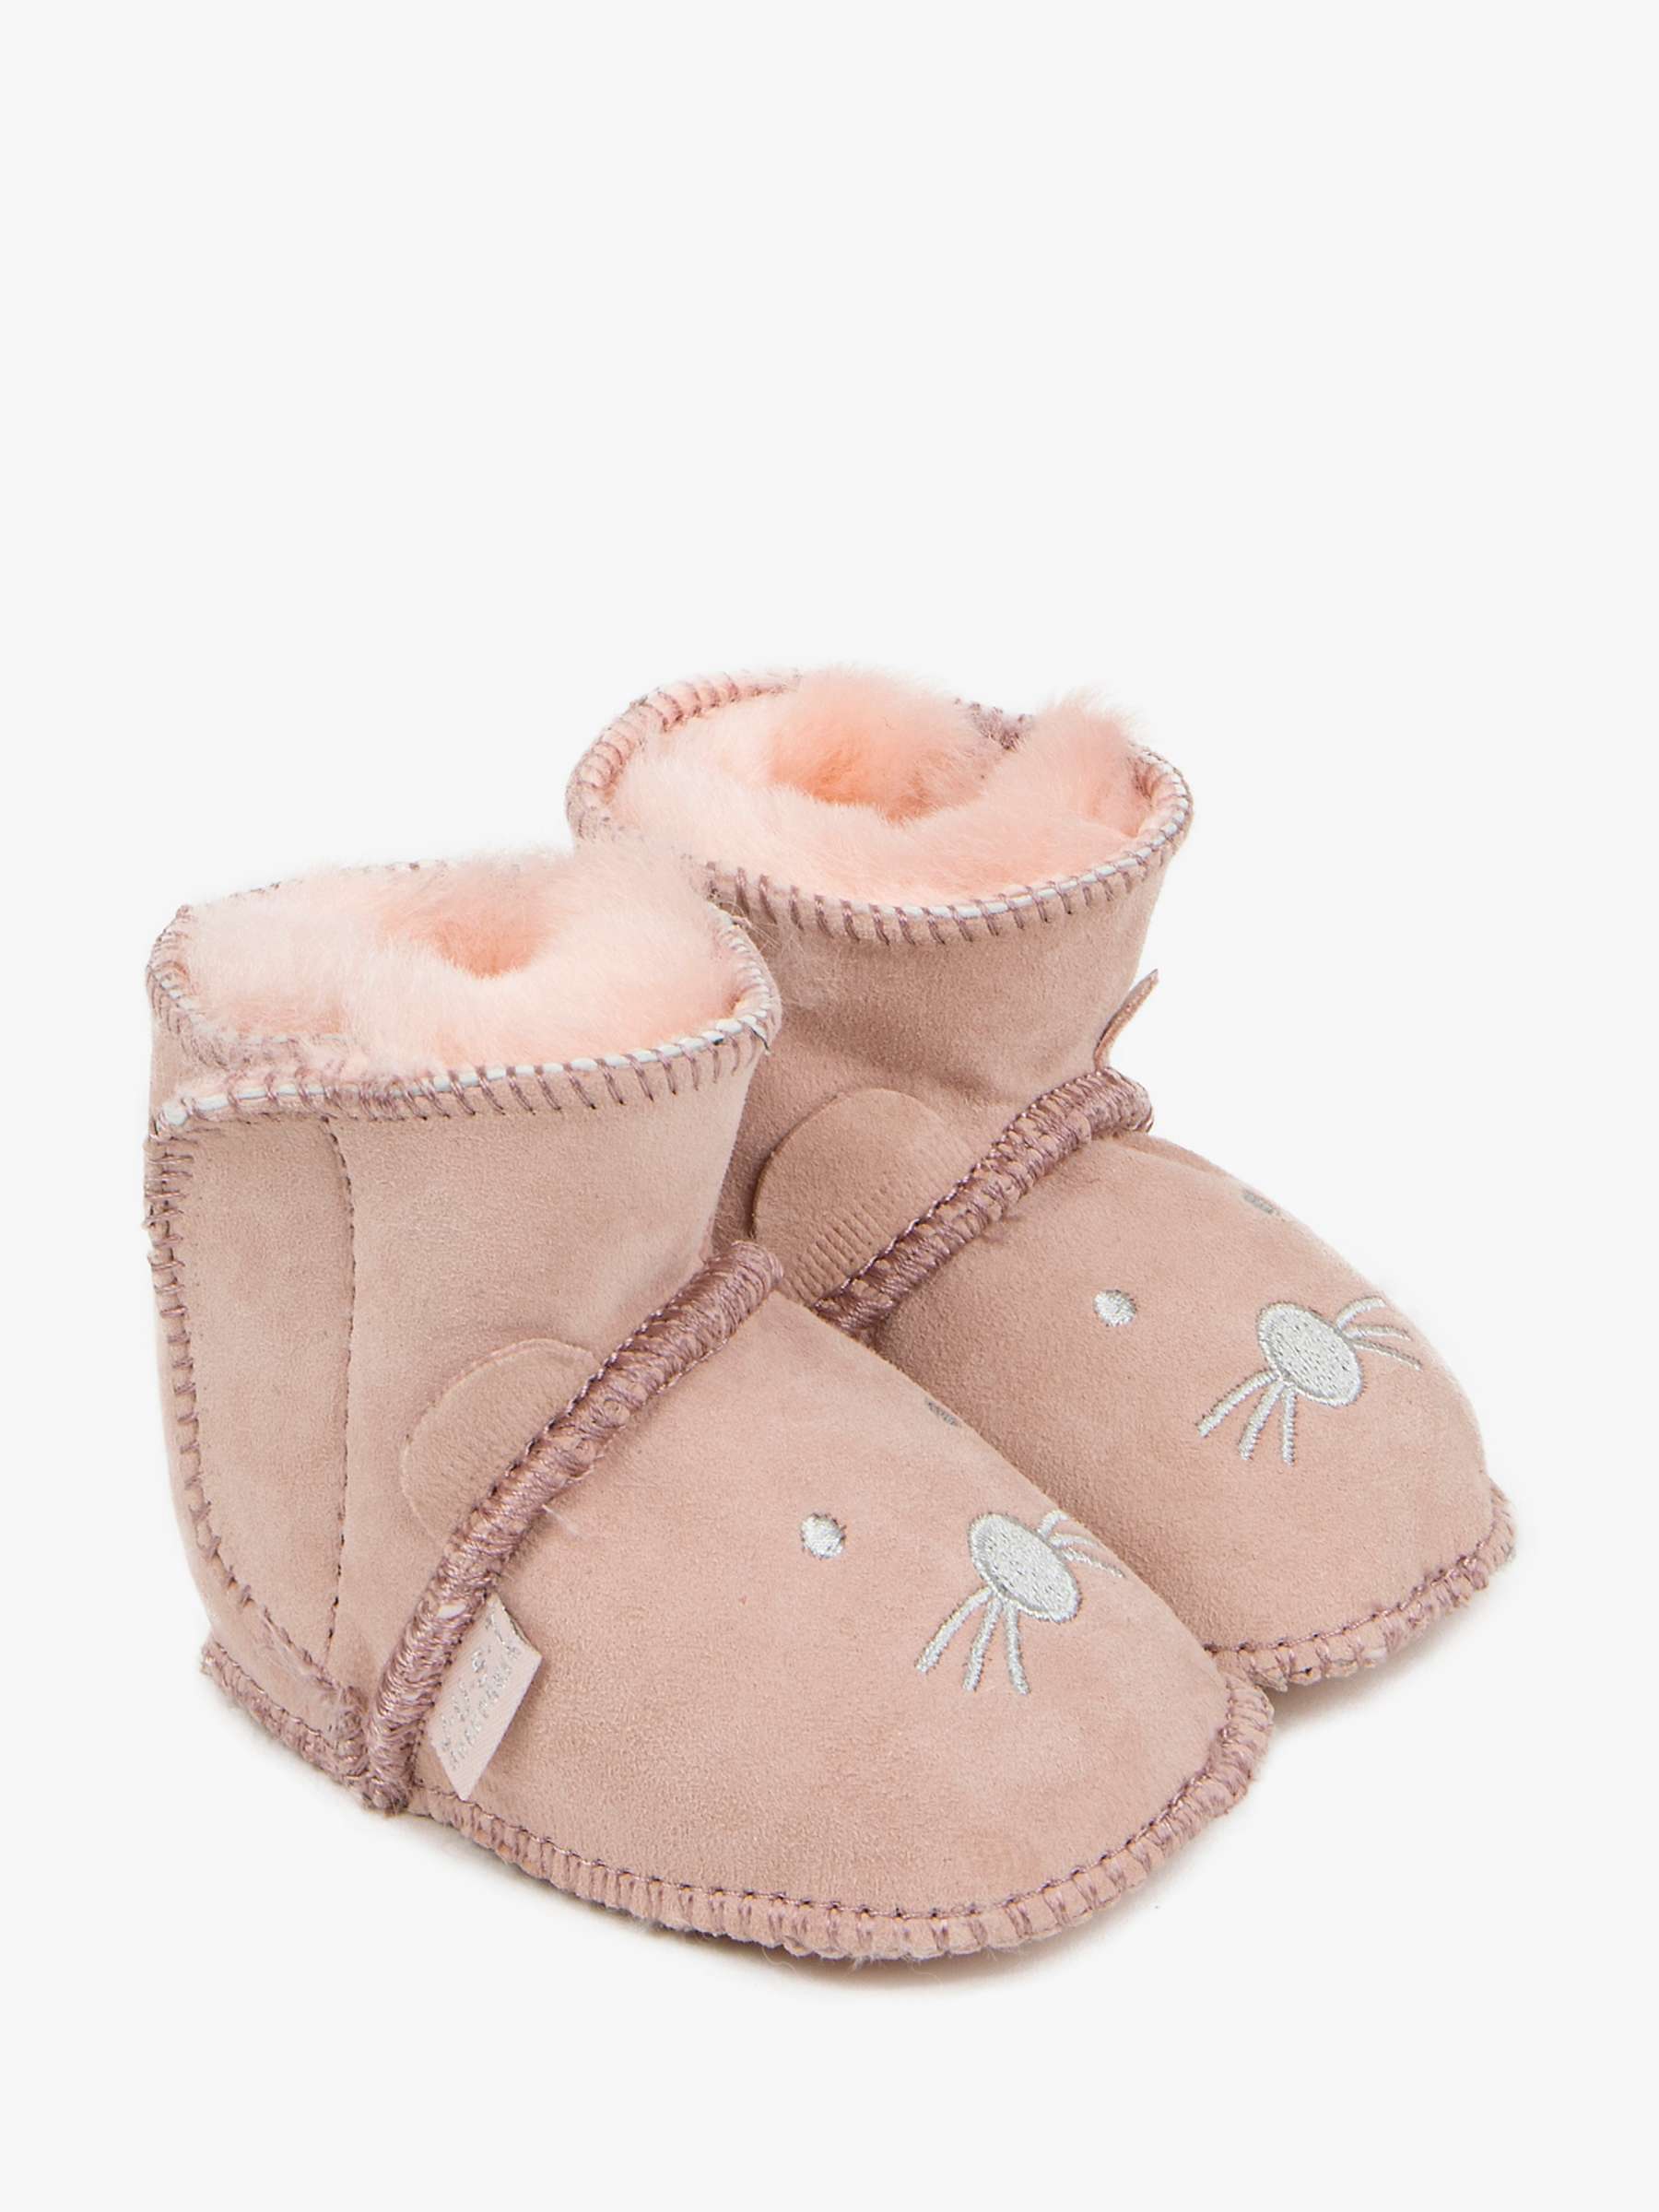 Buy Just Sheepskin Baby Sidney Sheepskin Booties, Pink Online at johnlewis.com